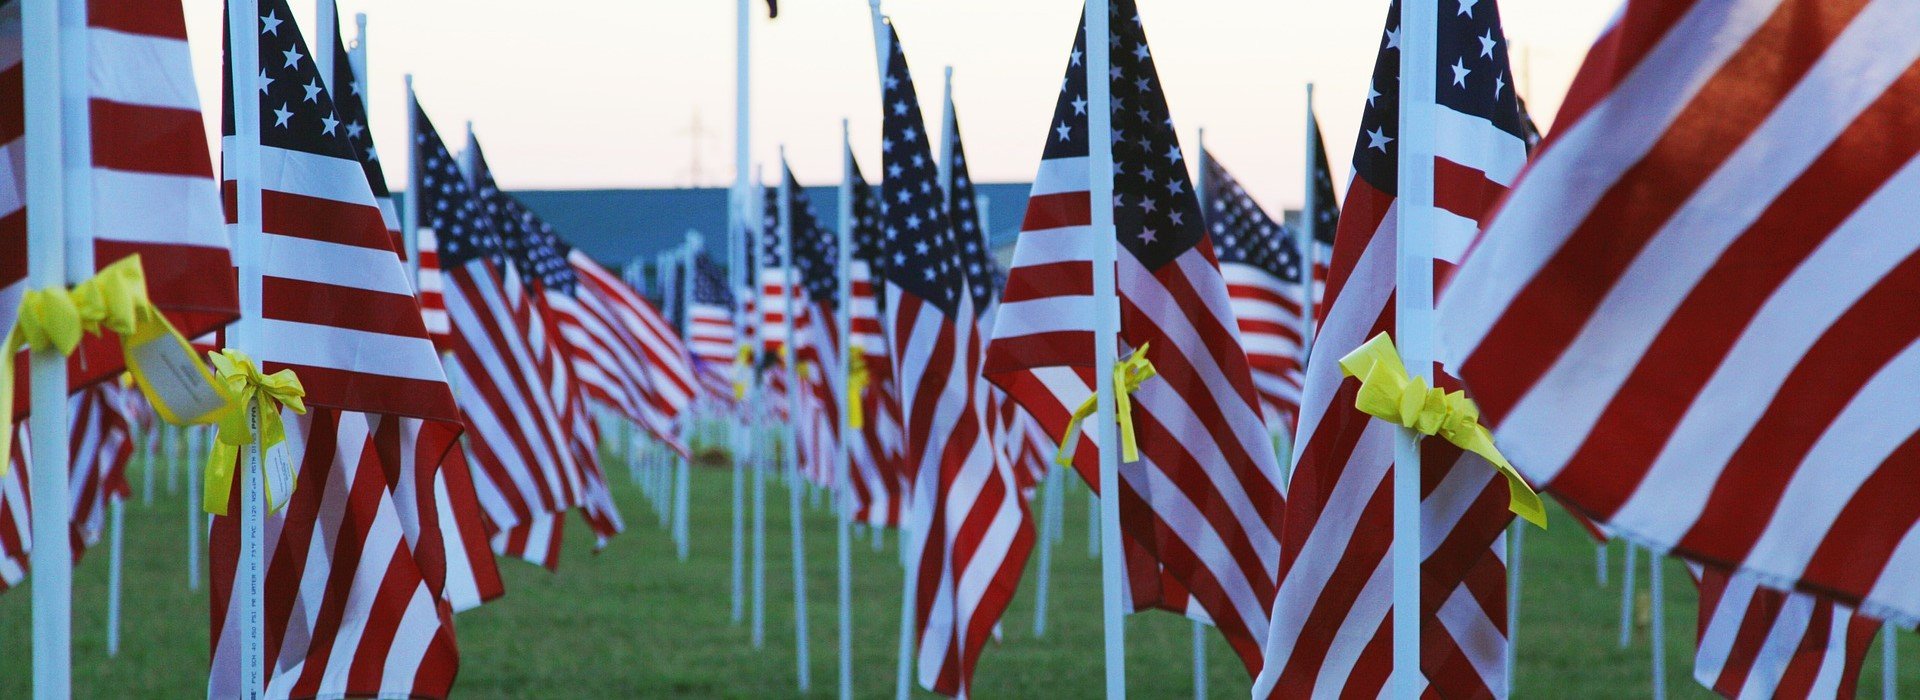 Memorial Day Flags in Washington DC - VeteranCarDonations.org